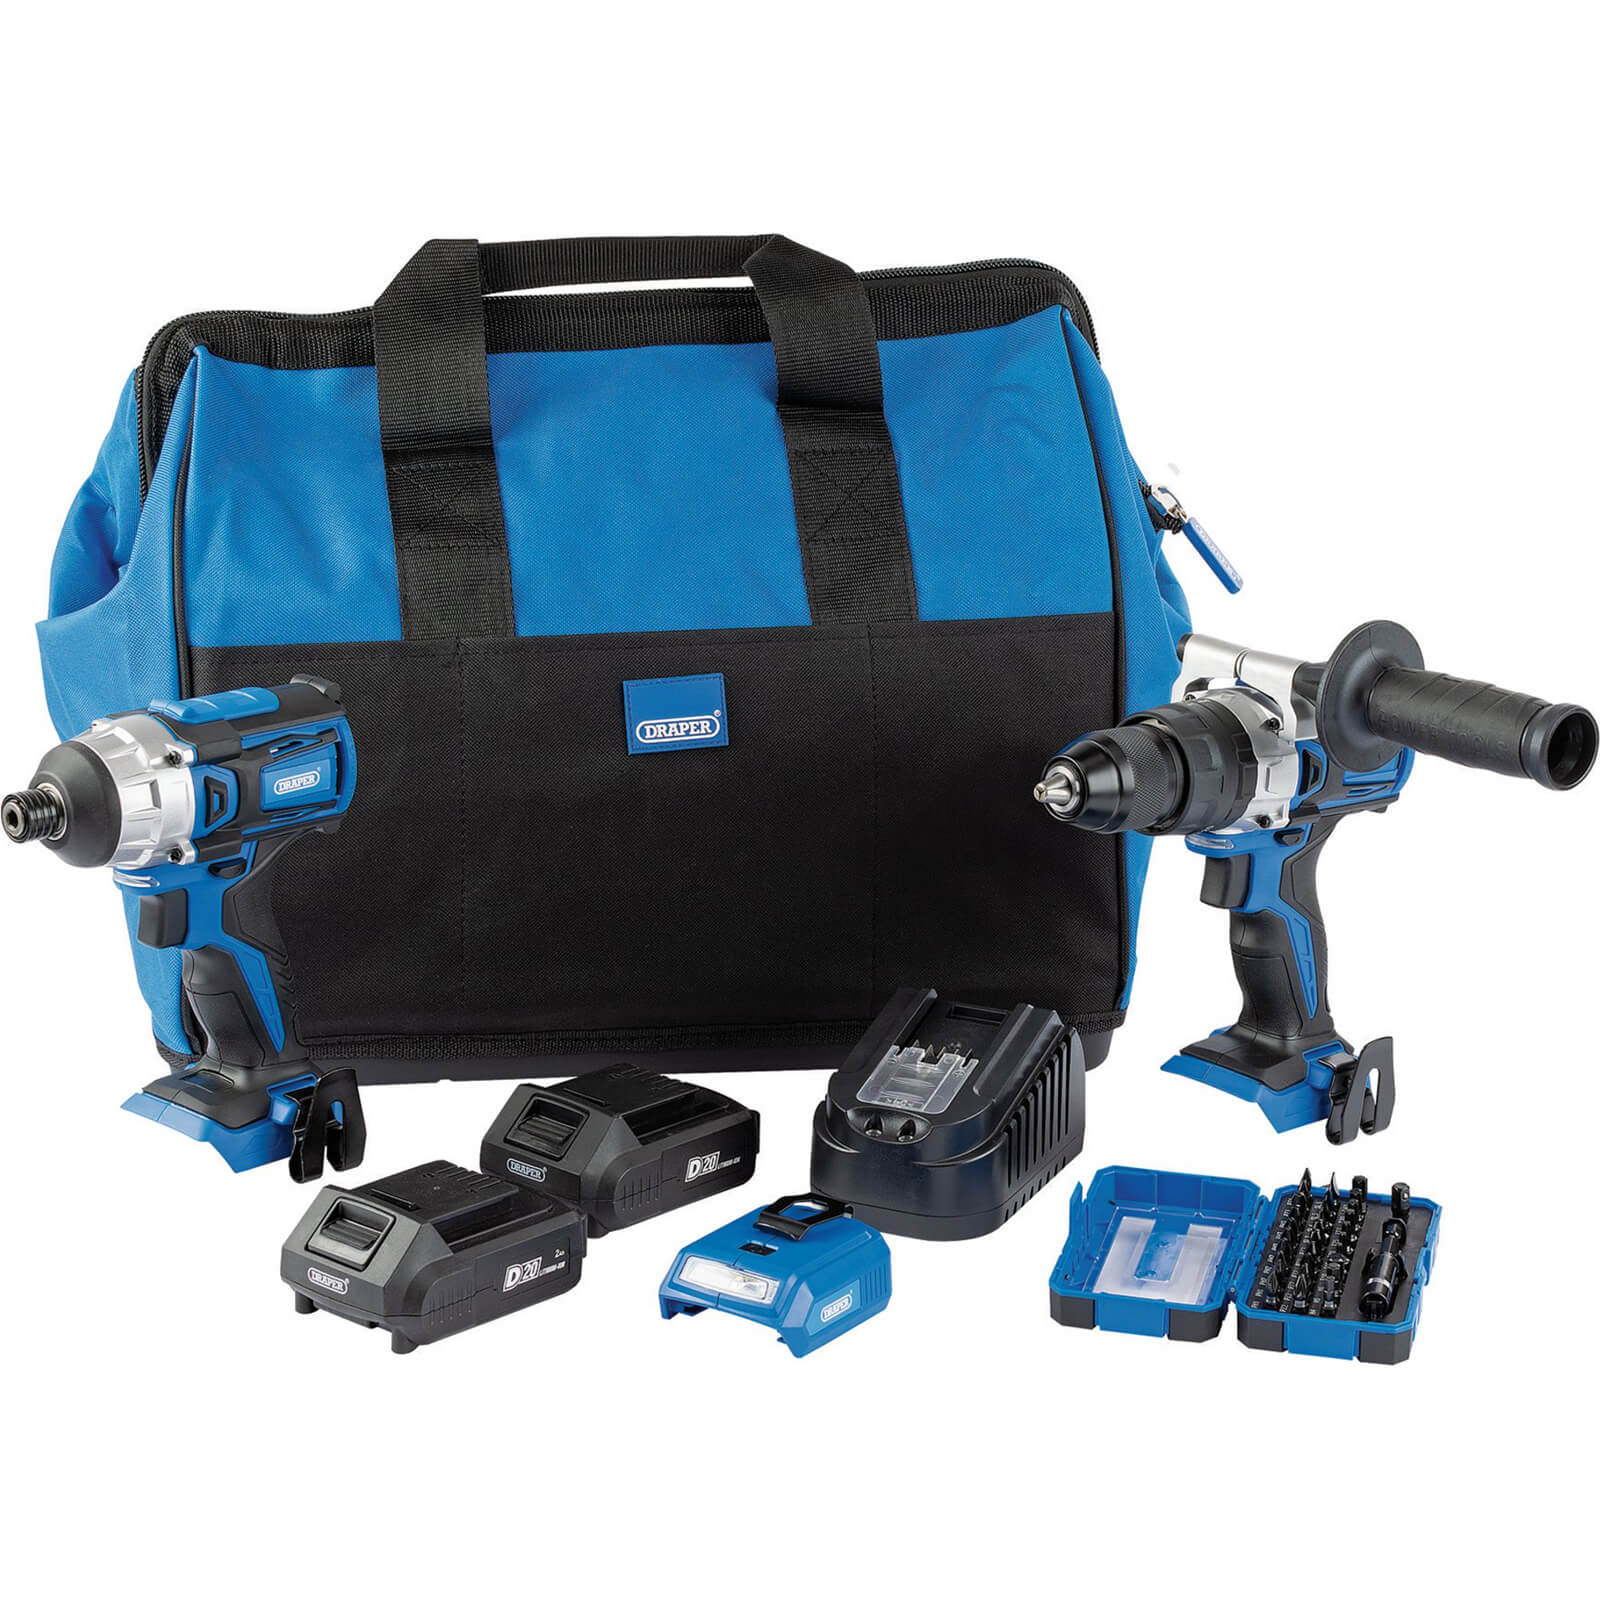 Image of Draper 4 Piece 20v D20 Cordless Fix N Go Power Tool Kit 2 x 2ah Li-ion Charger Bag & Accessories